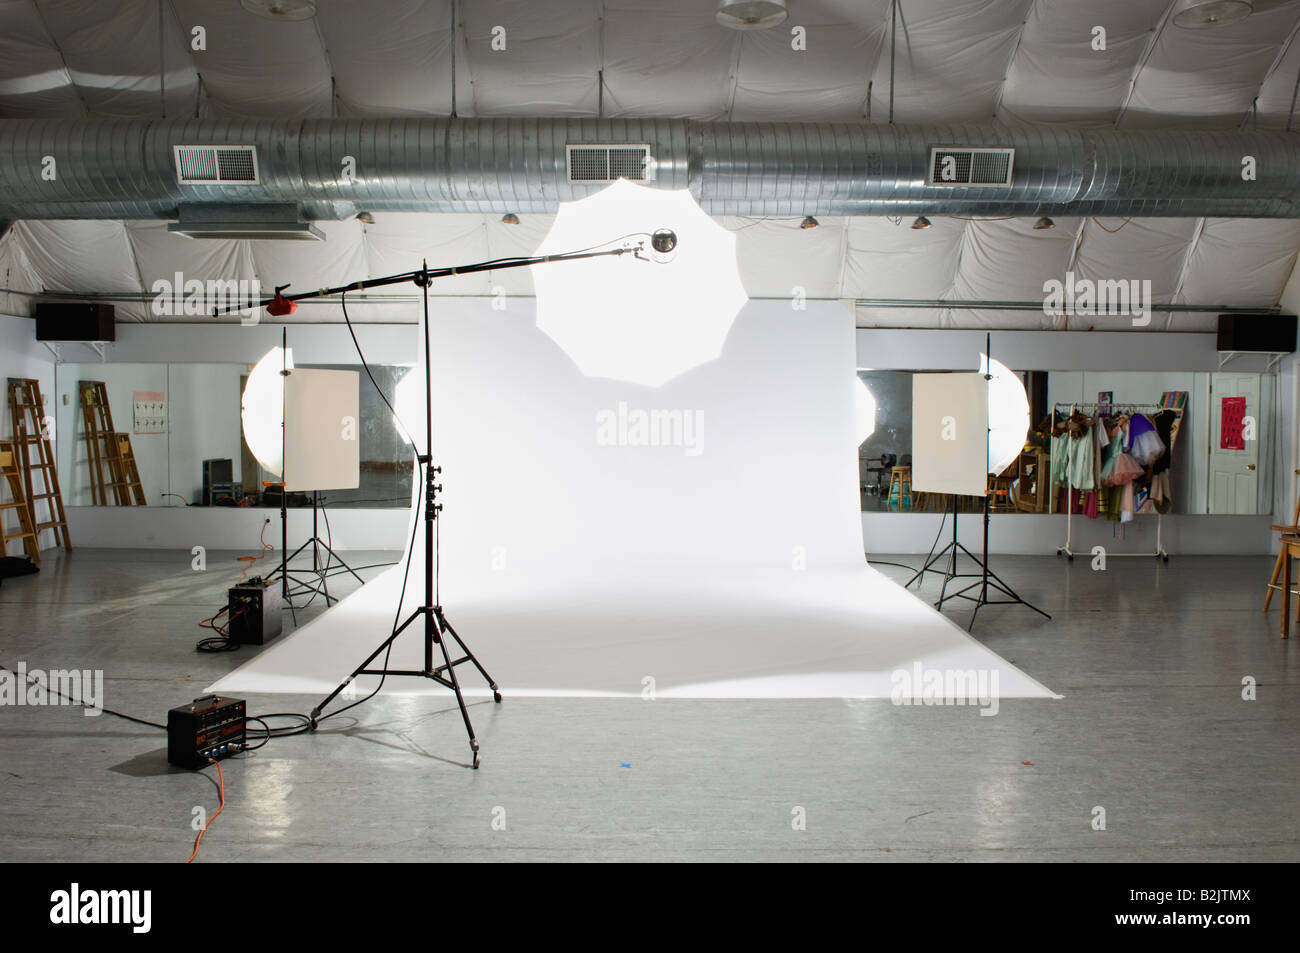 Photo Studio with White Backdrop and Flash Units Stock Photo